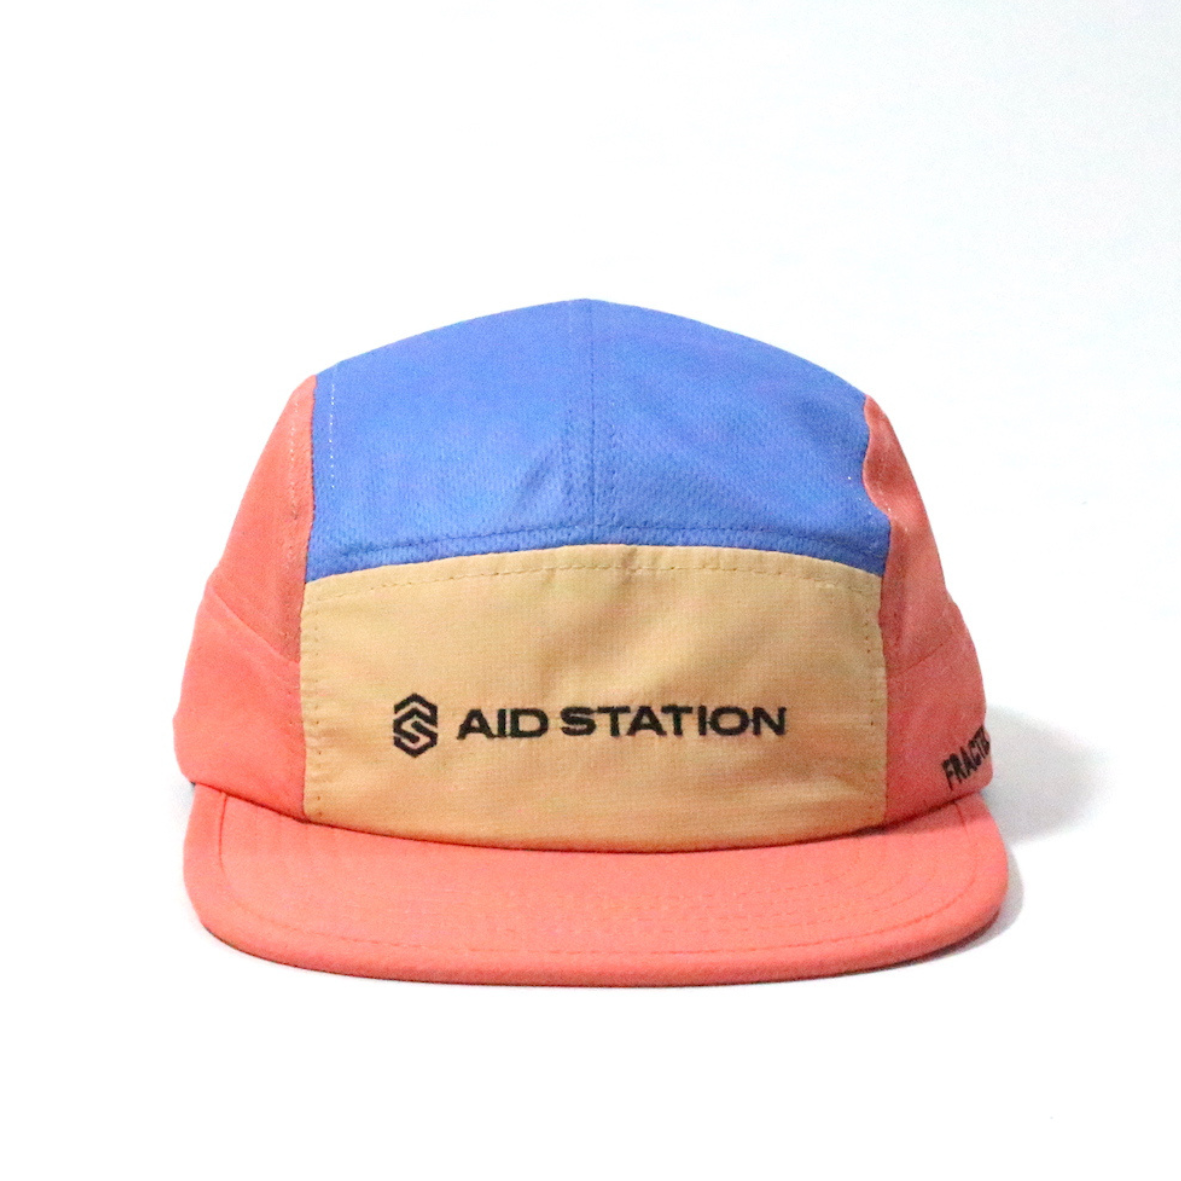 Aid Station - Fractel Original Running Hat